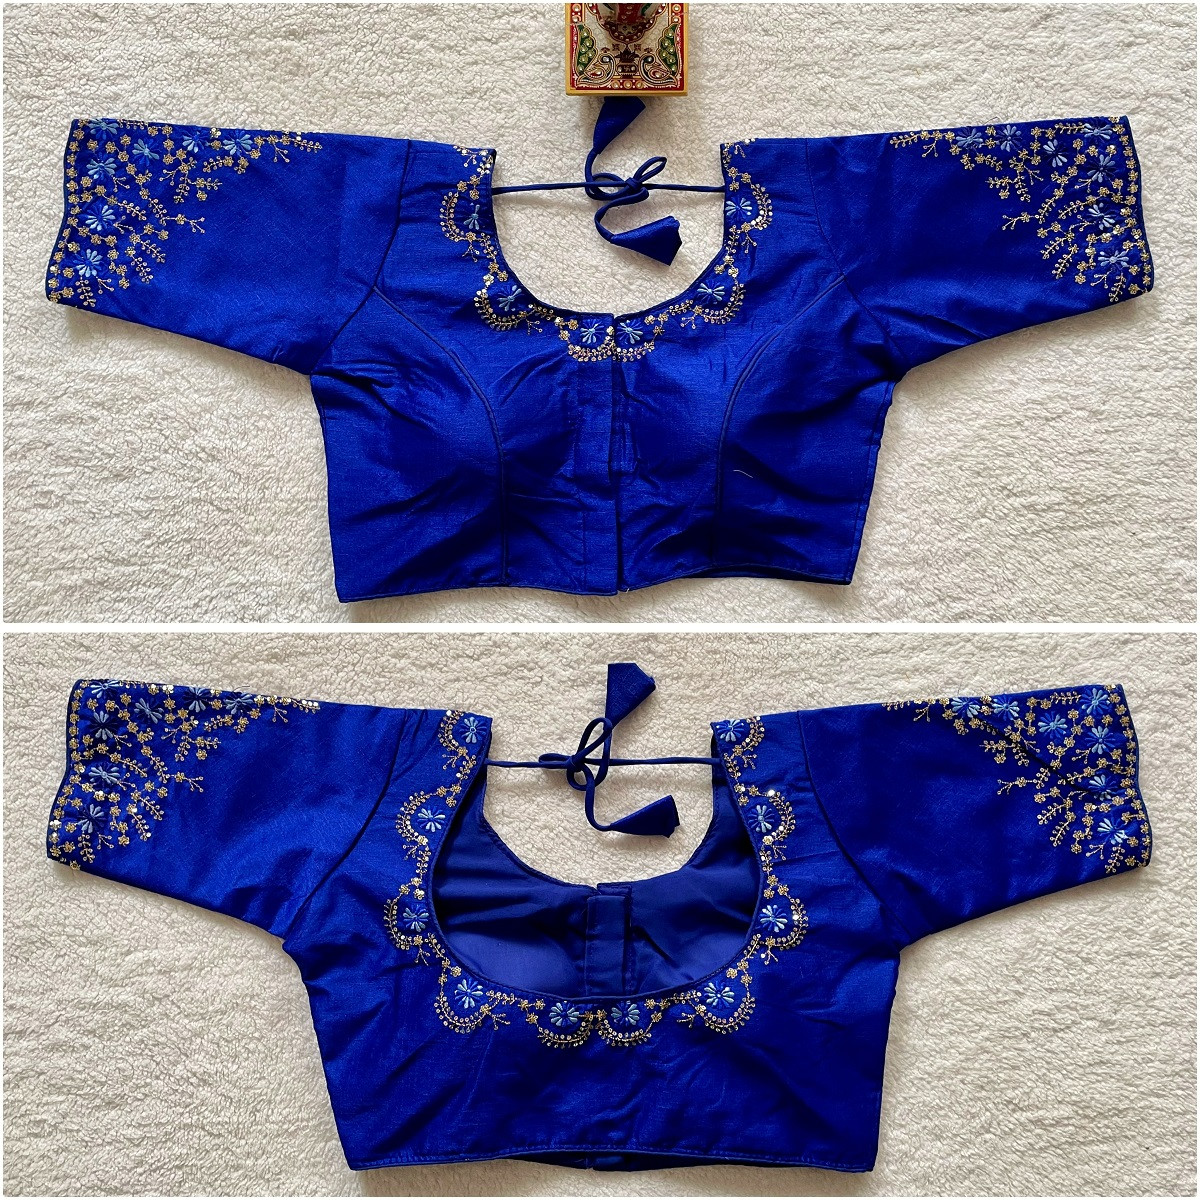 Phantom Silk Embroidered Designer Blouse - Royal Blue(L)